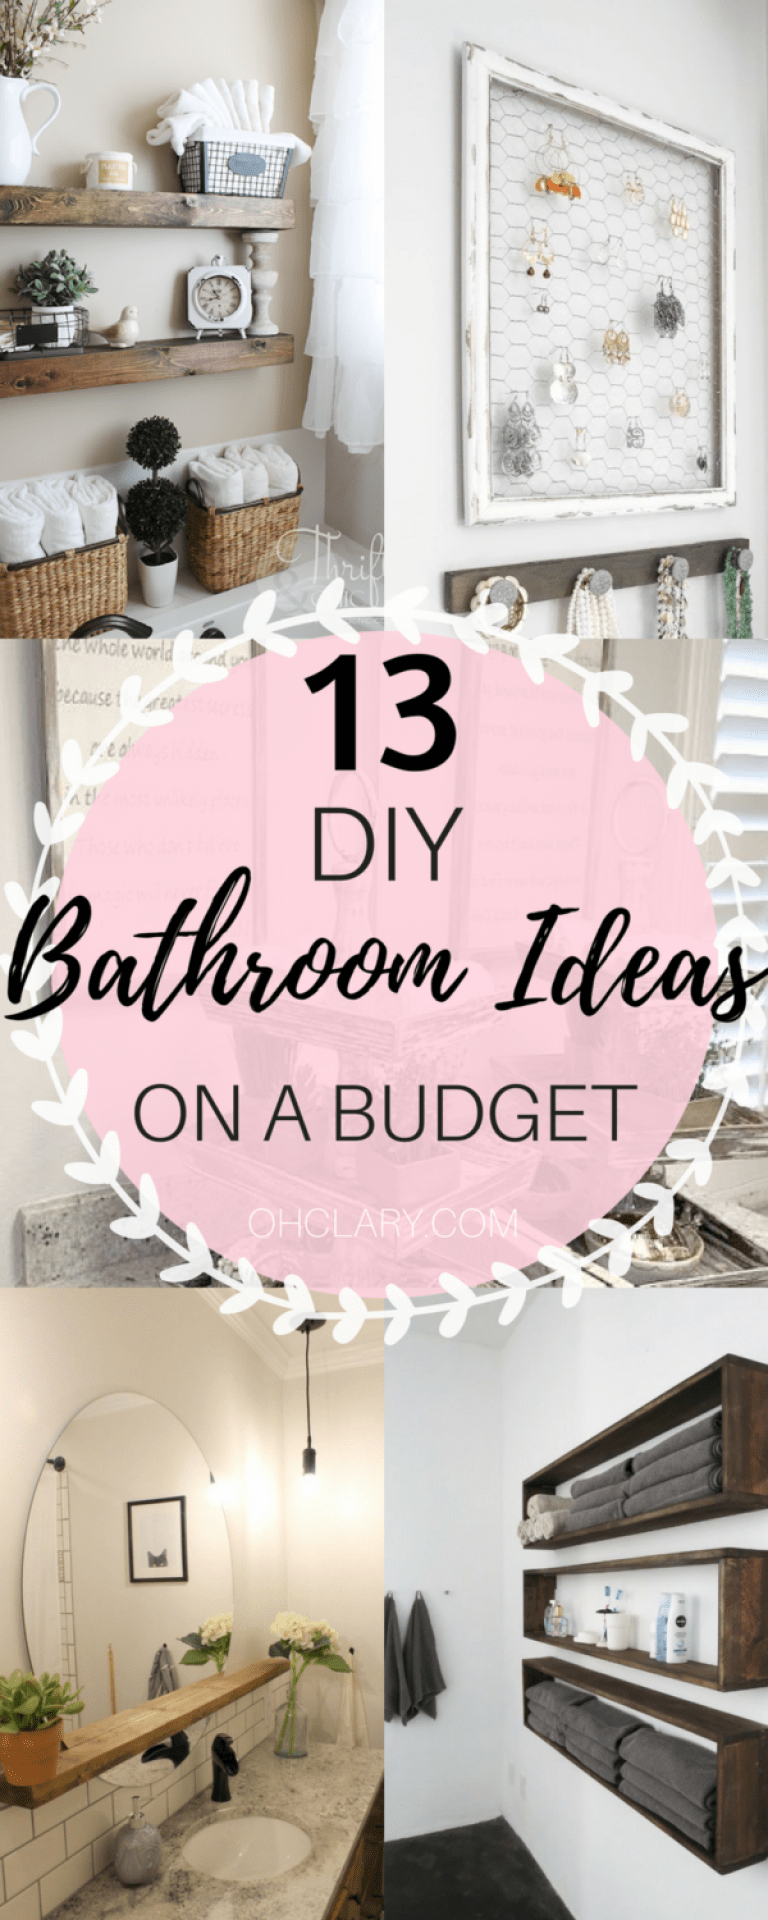 12 DIY Bathroom Decor Ideas On a Budget You Can't Afford to Miss Out On - 12 DIY Bathroom Decor Ideas On a Budget You Can't Afford to Miss Out On -   25 diy Decorations on a budget ideas